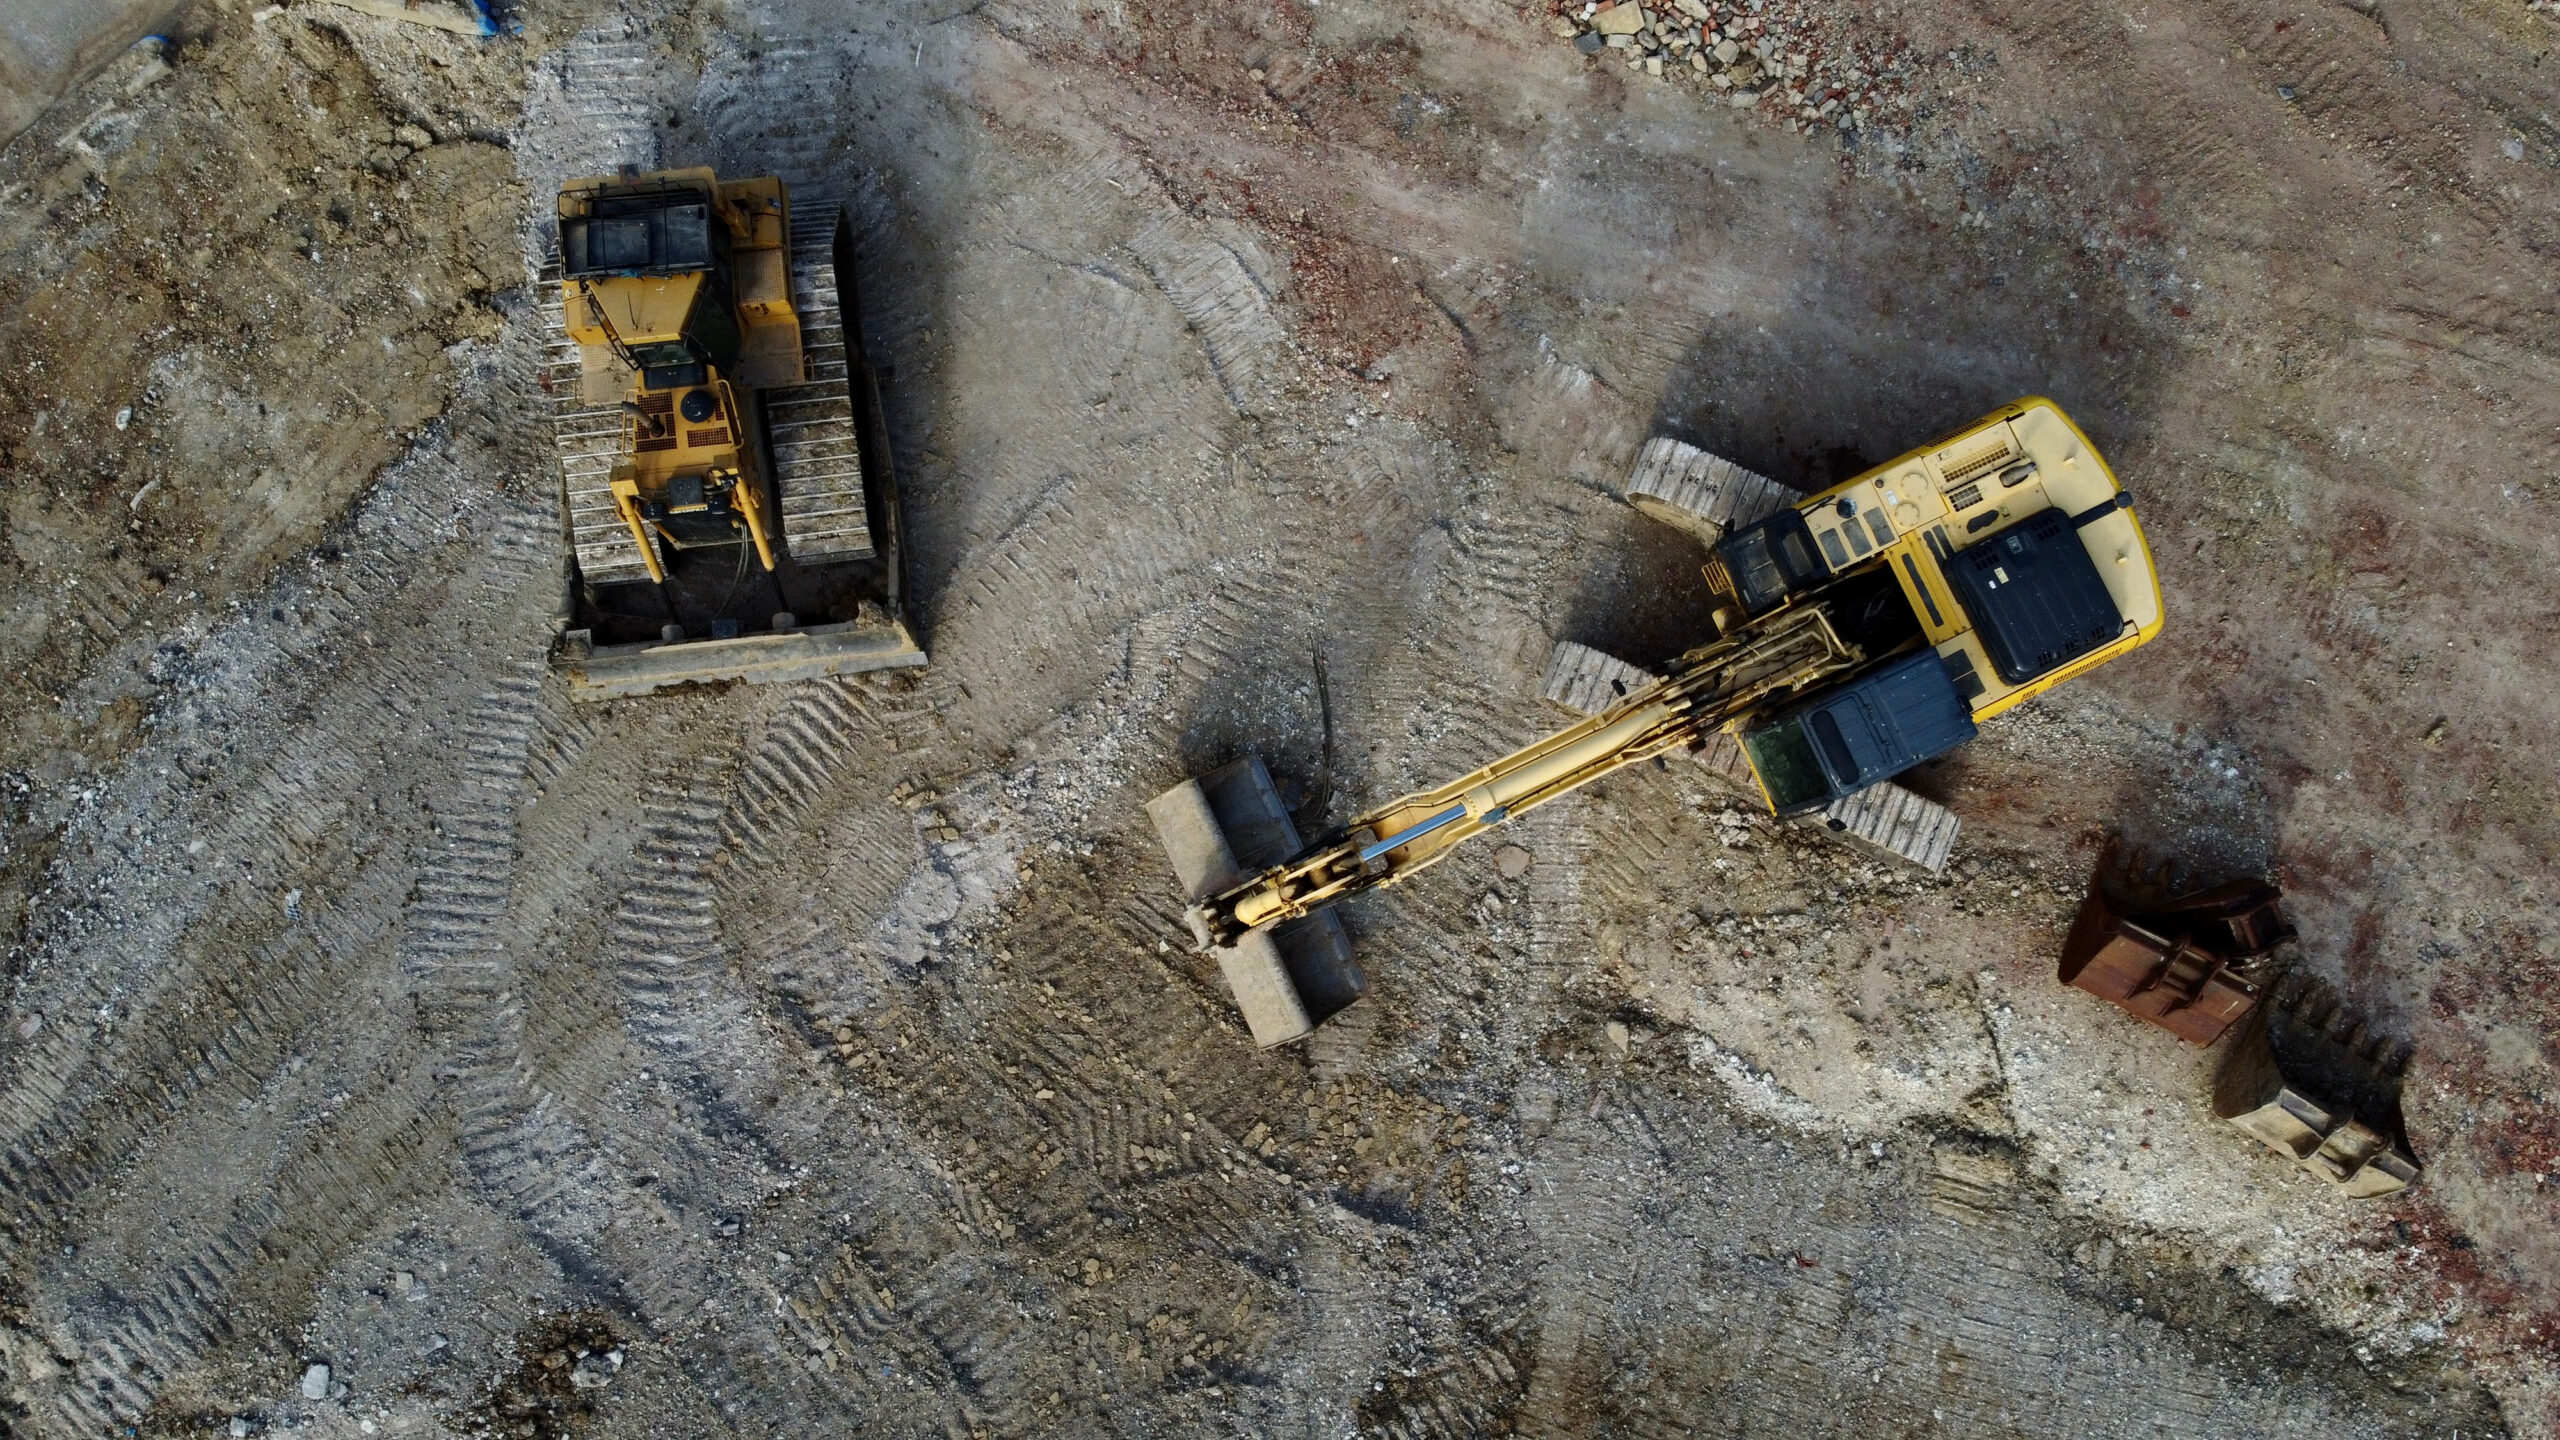 Excavator Digger 2.5  3 Ton Hire - Edwards Plant